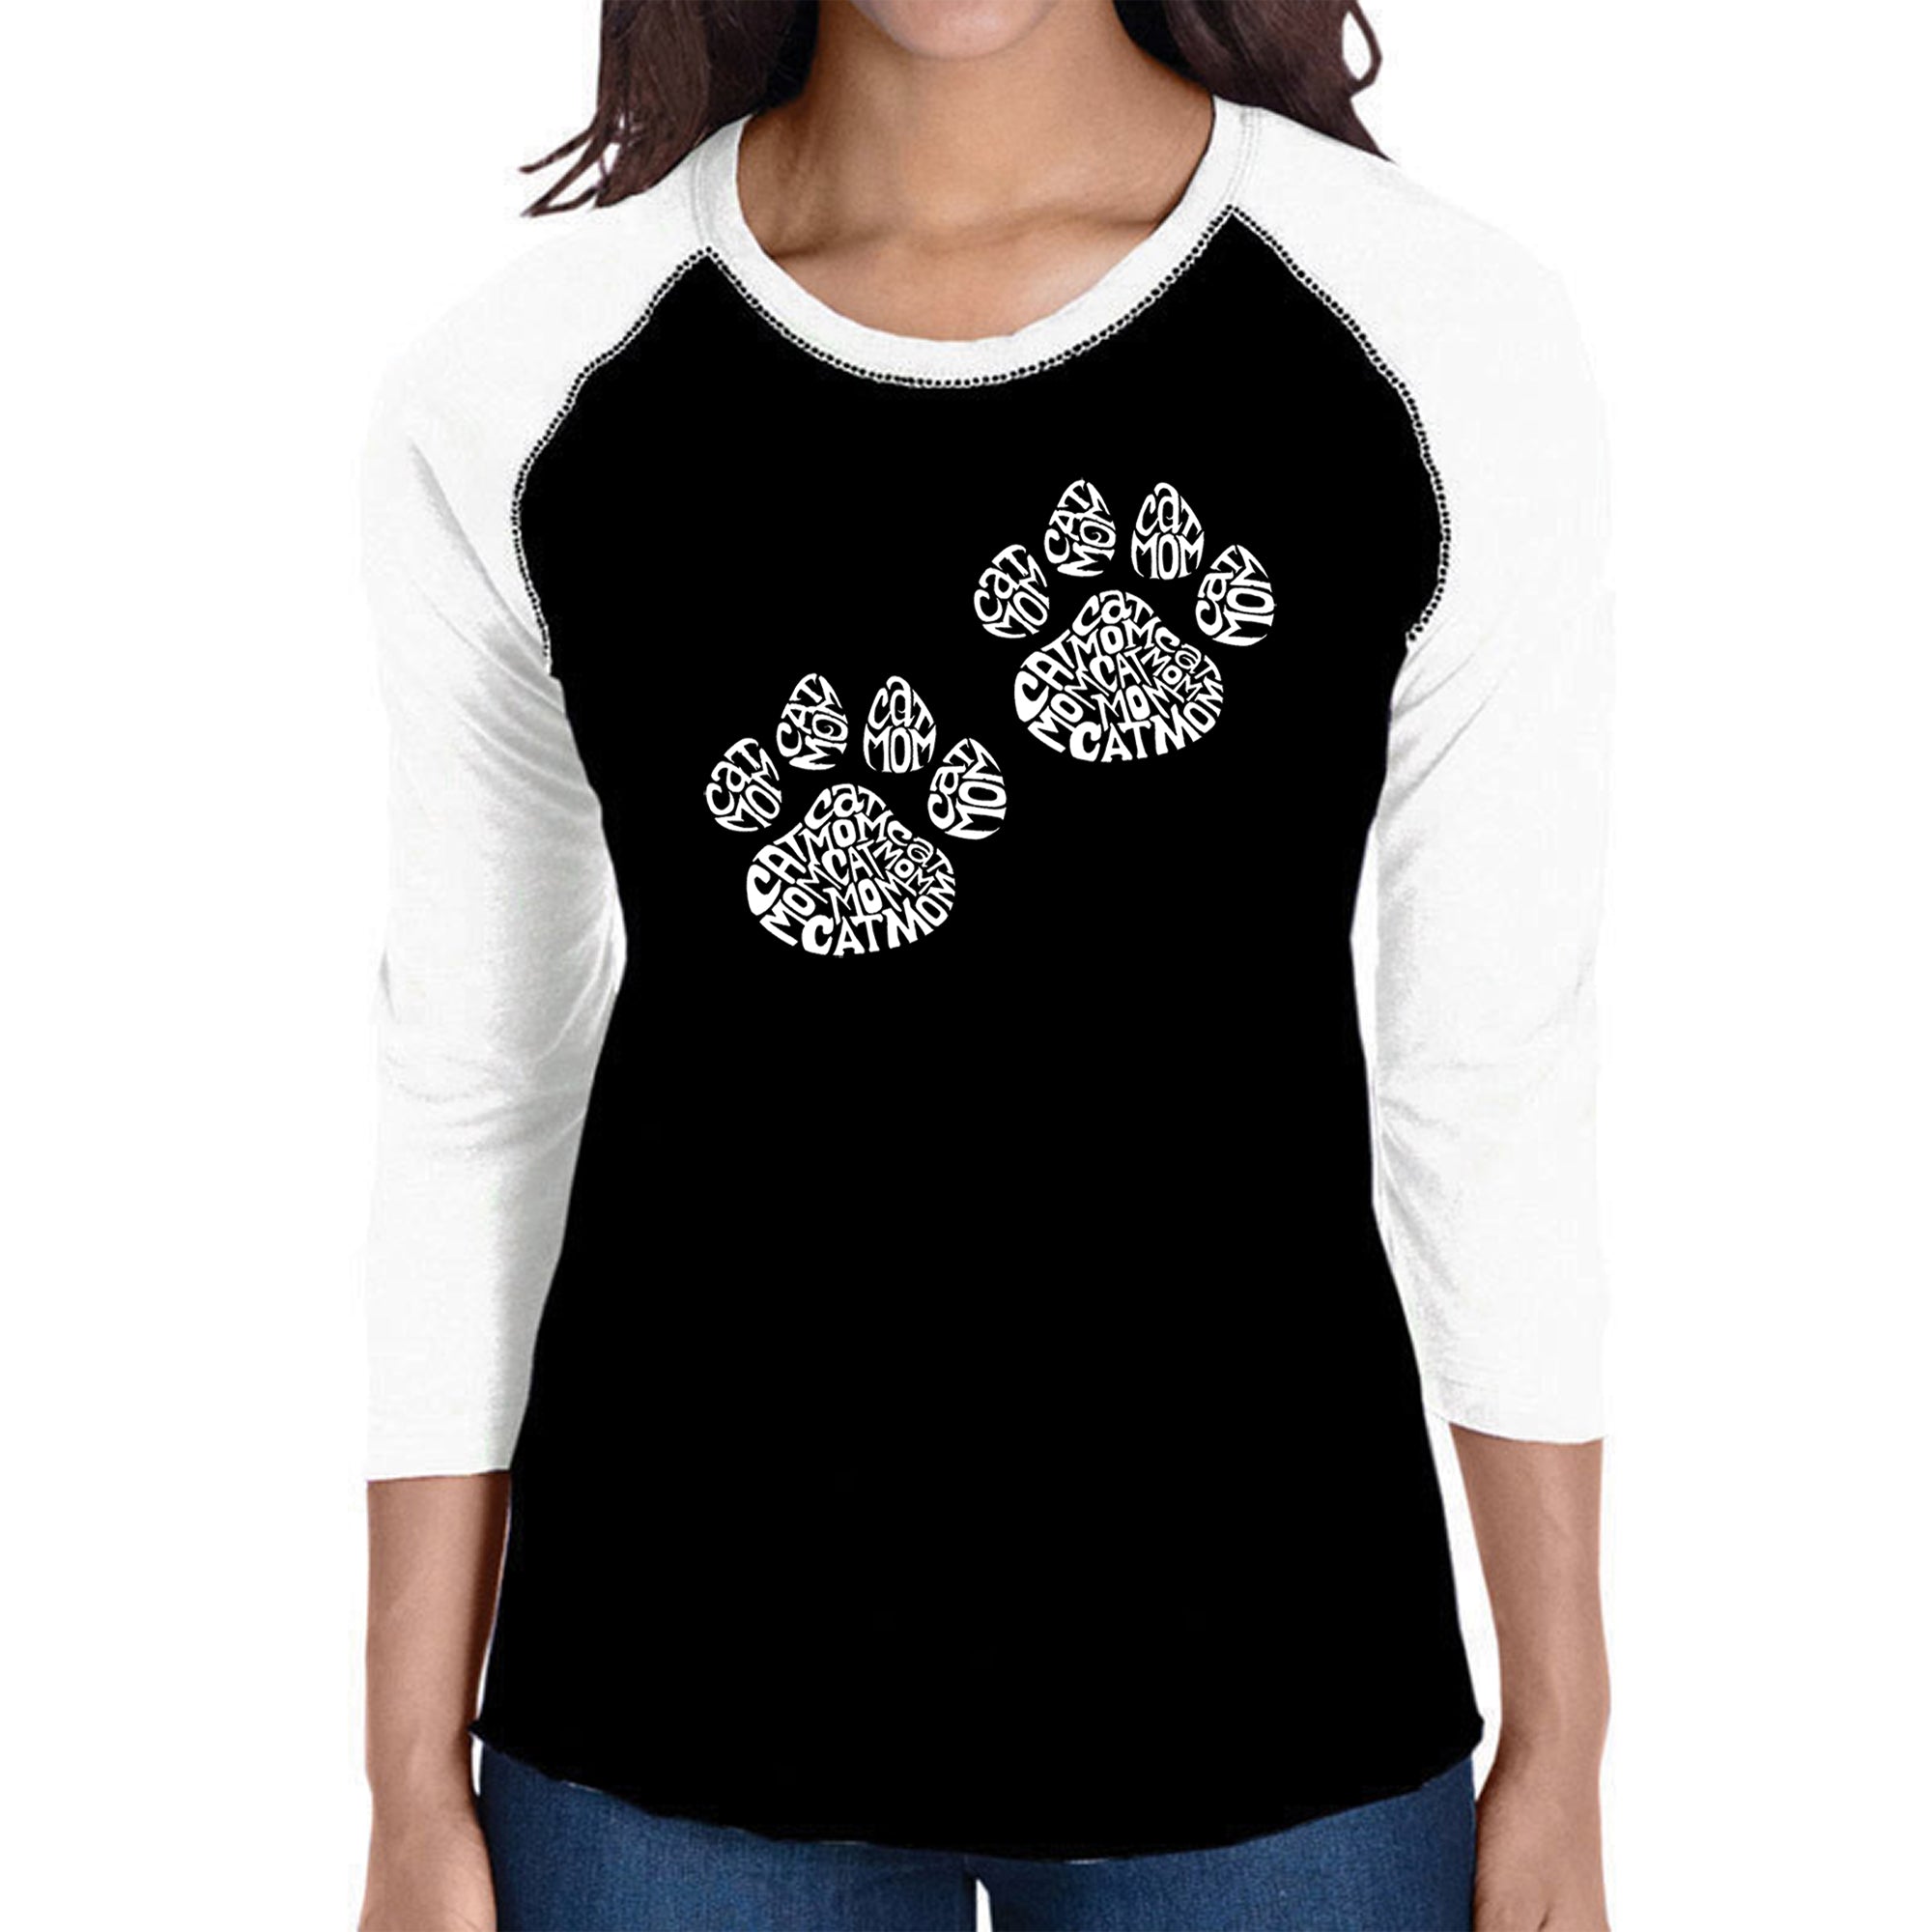 Cat Mom - Women's Raglan Baseball Word Art T-Shirt - Black/White - Medium